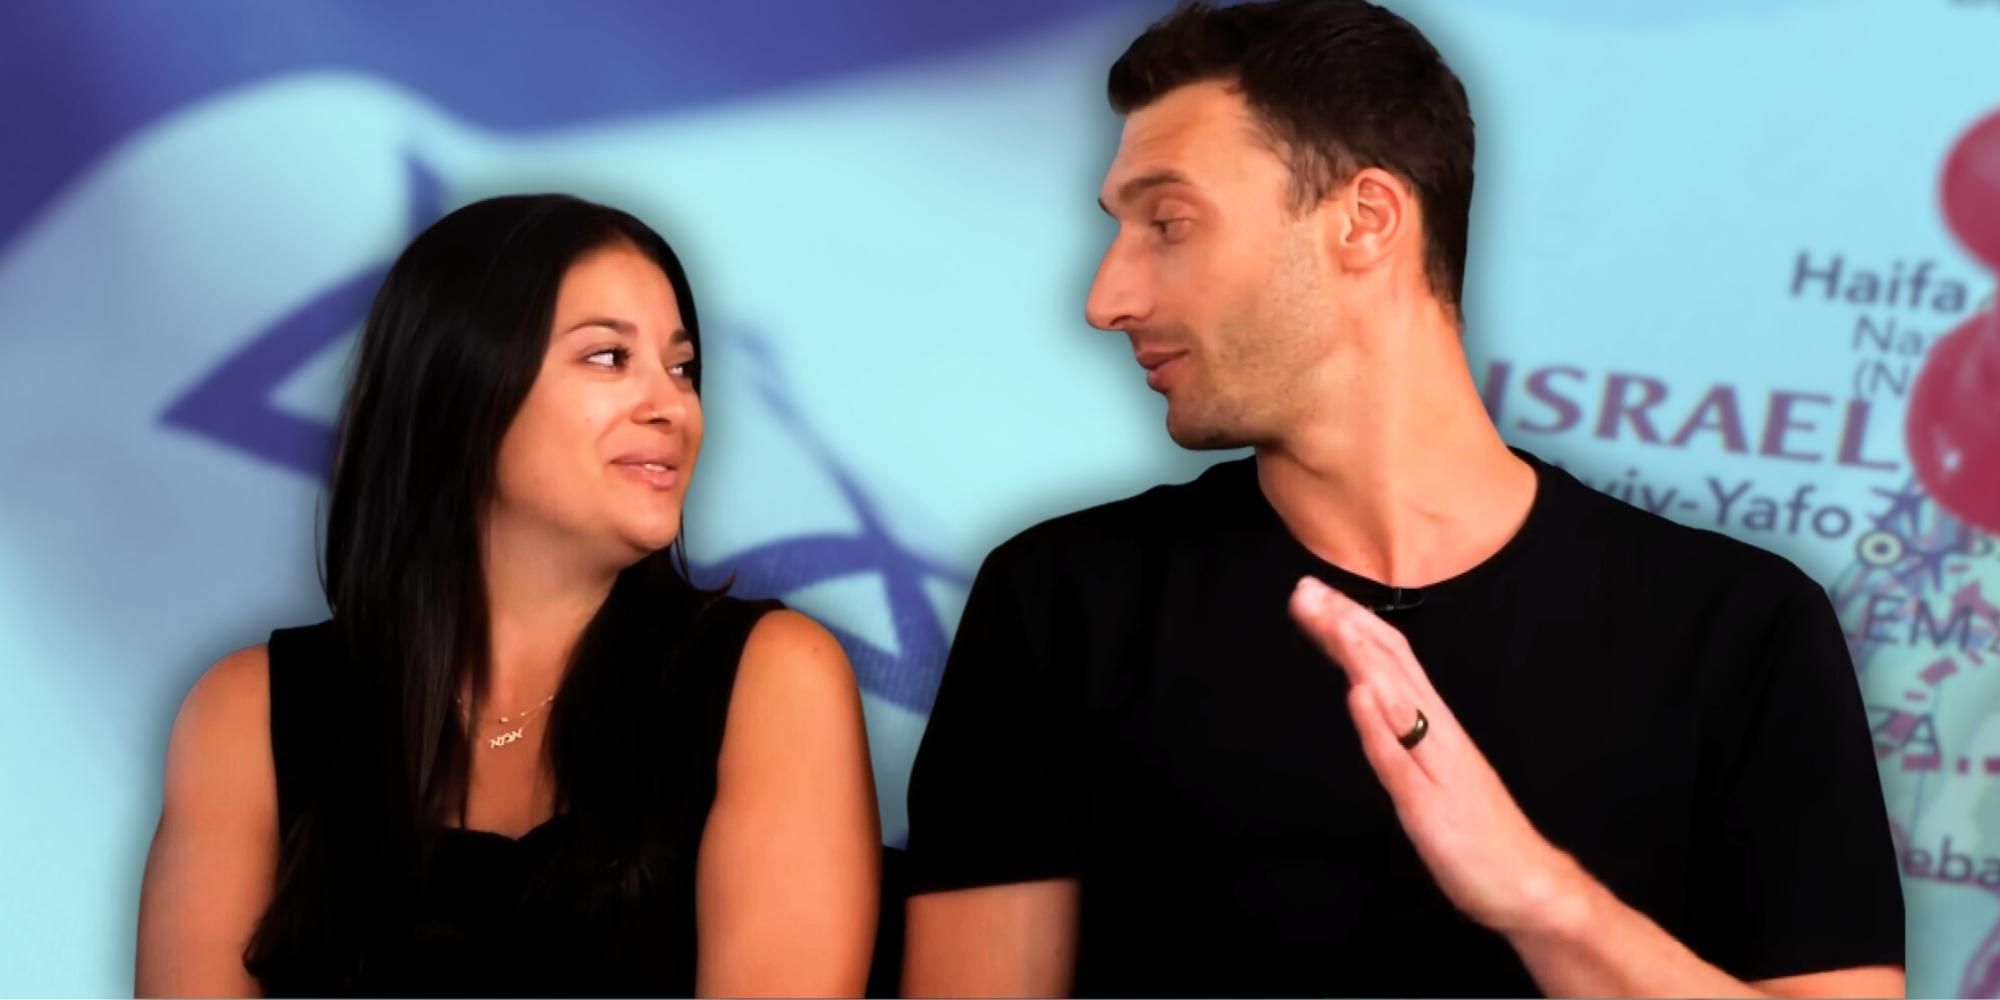 90 Day Fiancé - Loren and Alexei discuss move to Israel.